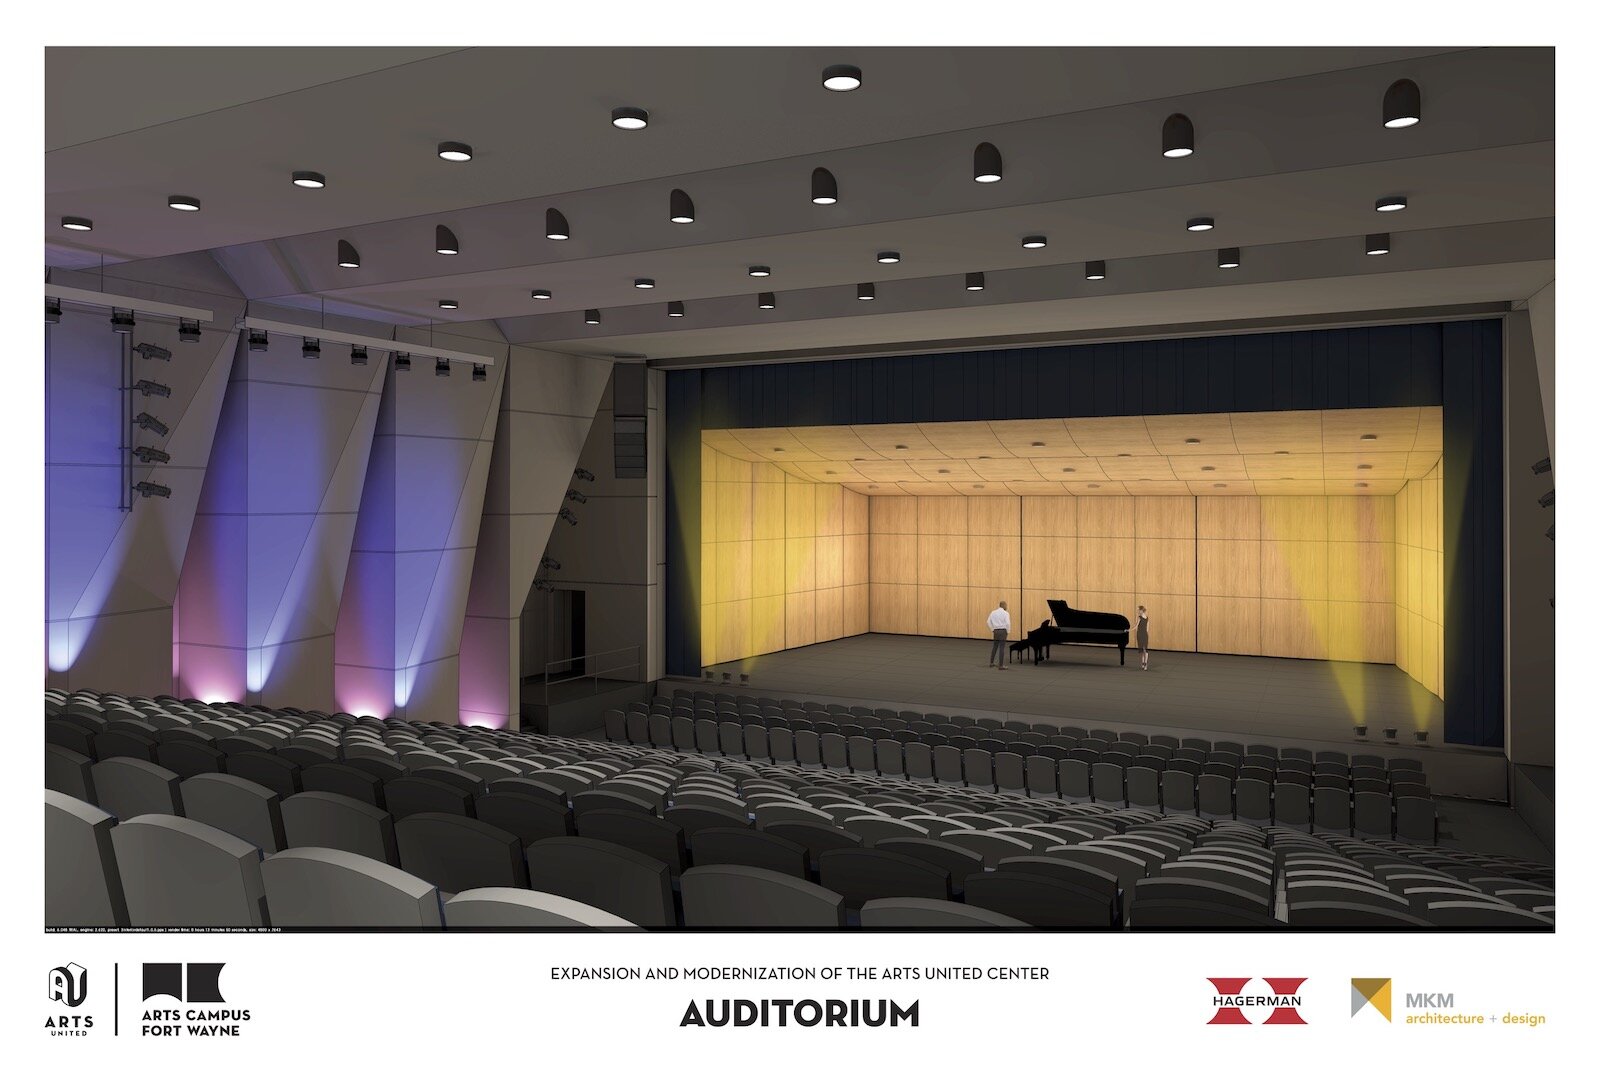 A rendering of the Arts United Center Auditorium.